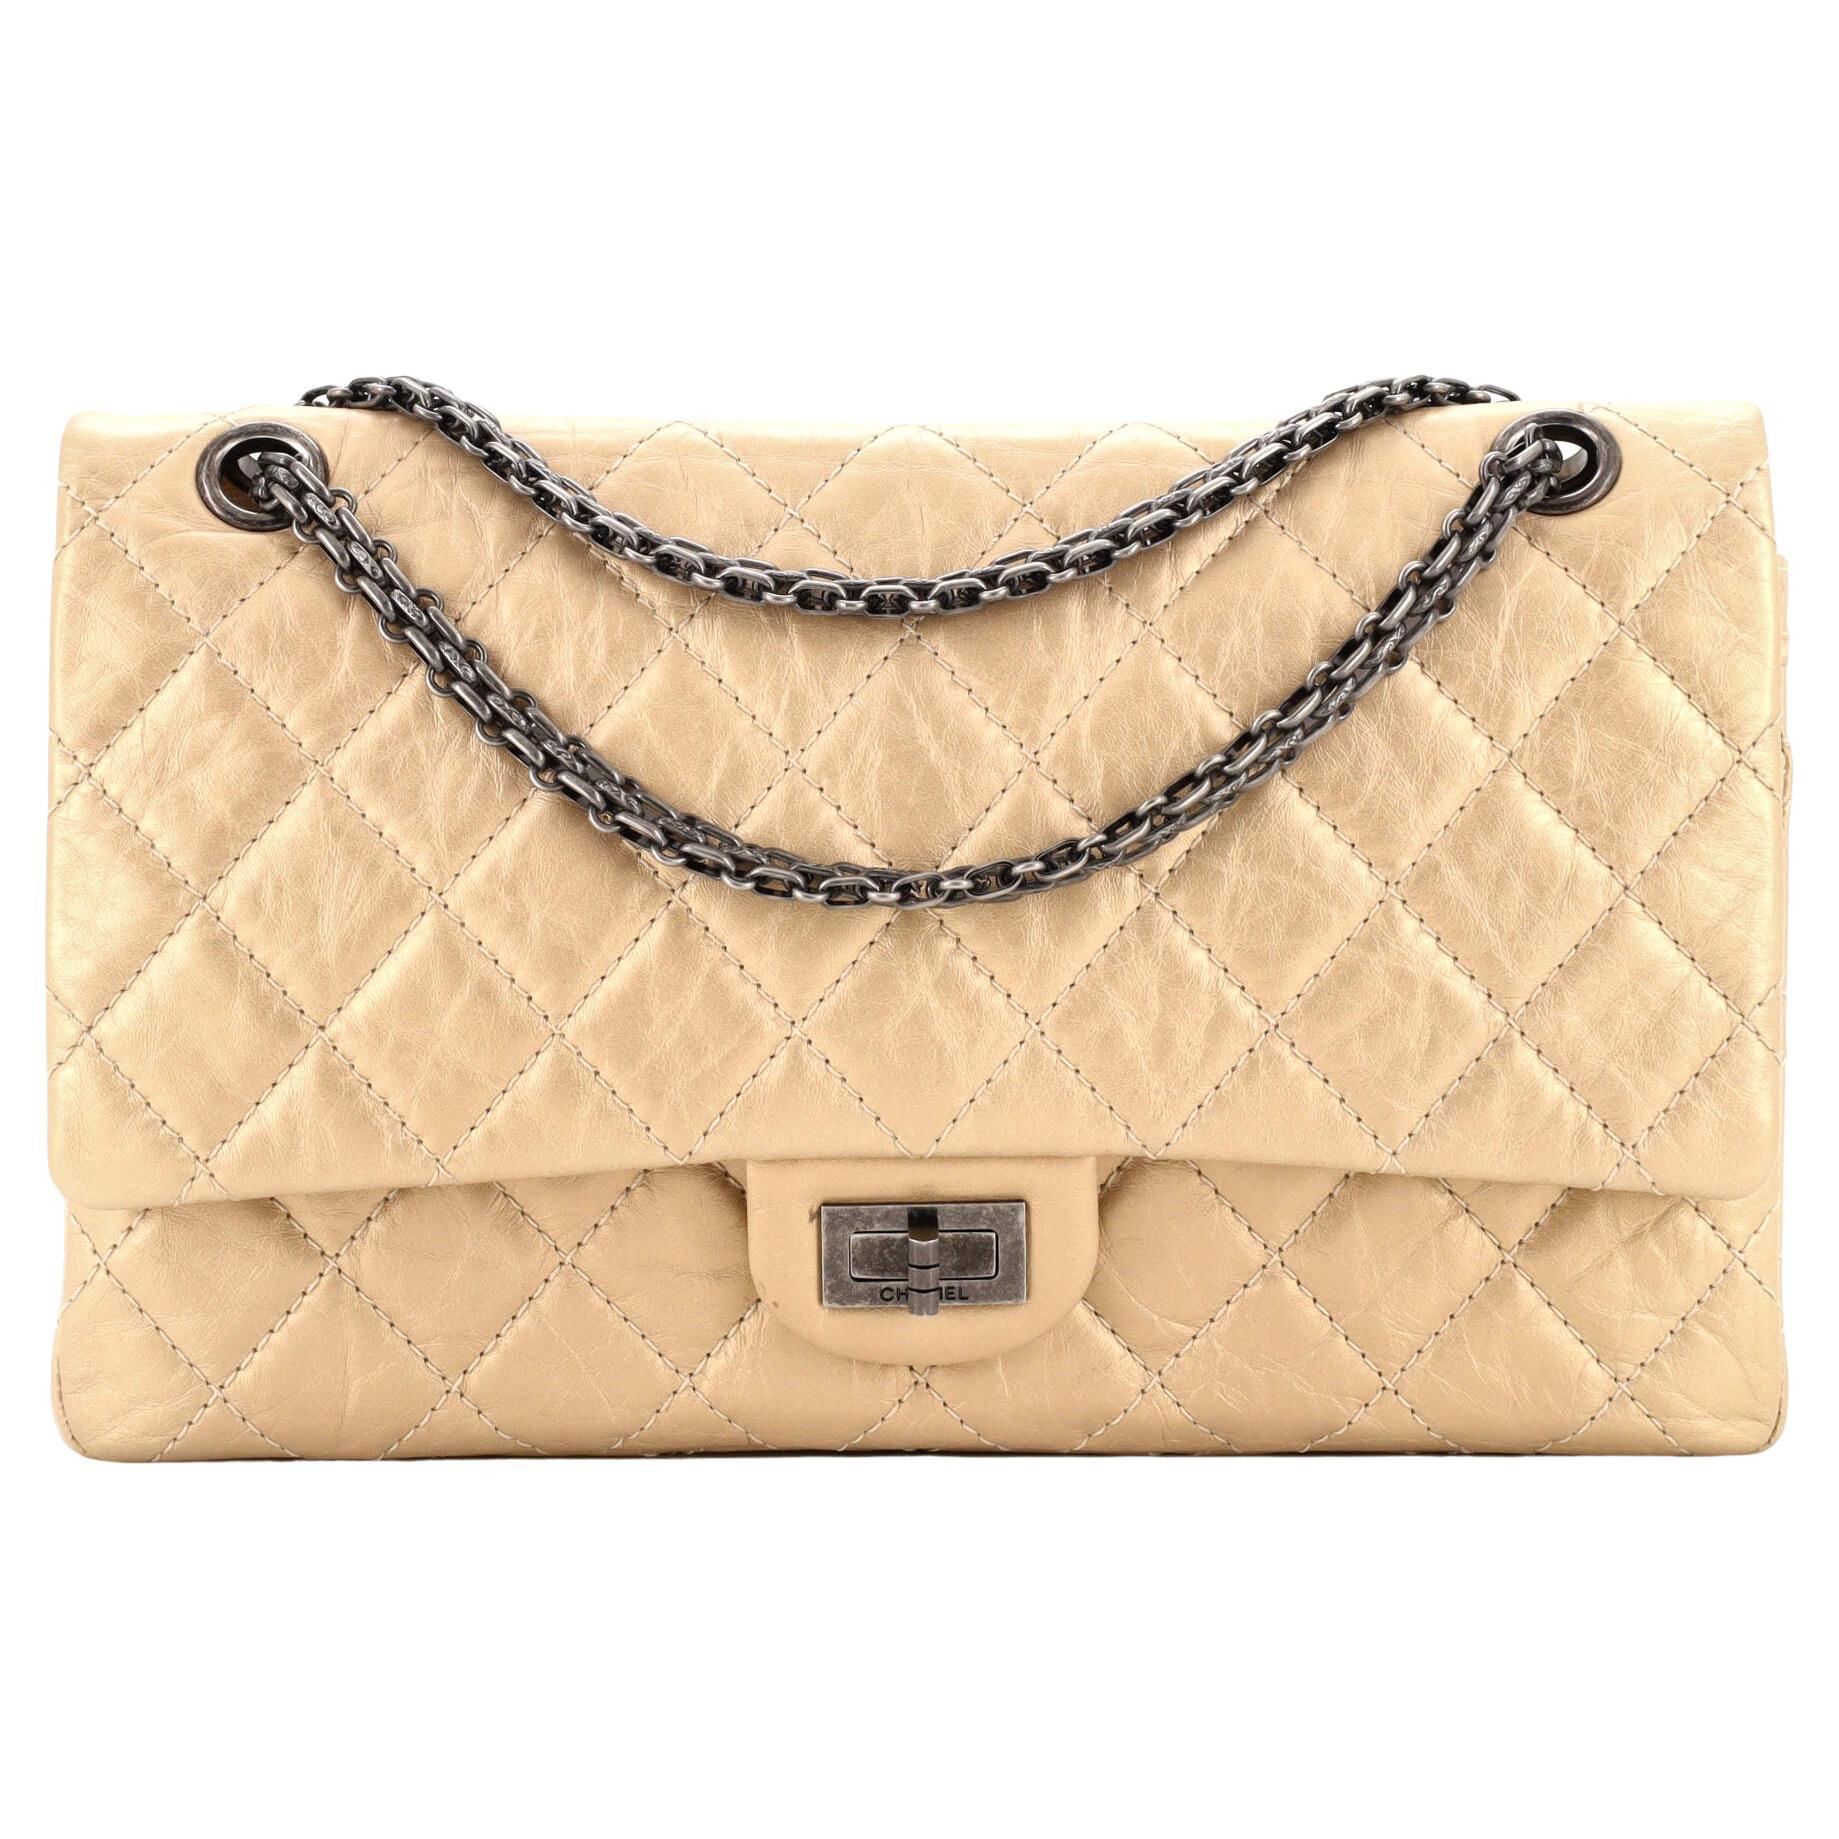 Handbags Chanel Chanel 2.55 Reissue Jumbo Gold Aged Calfskin Ruthenium